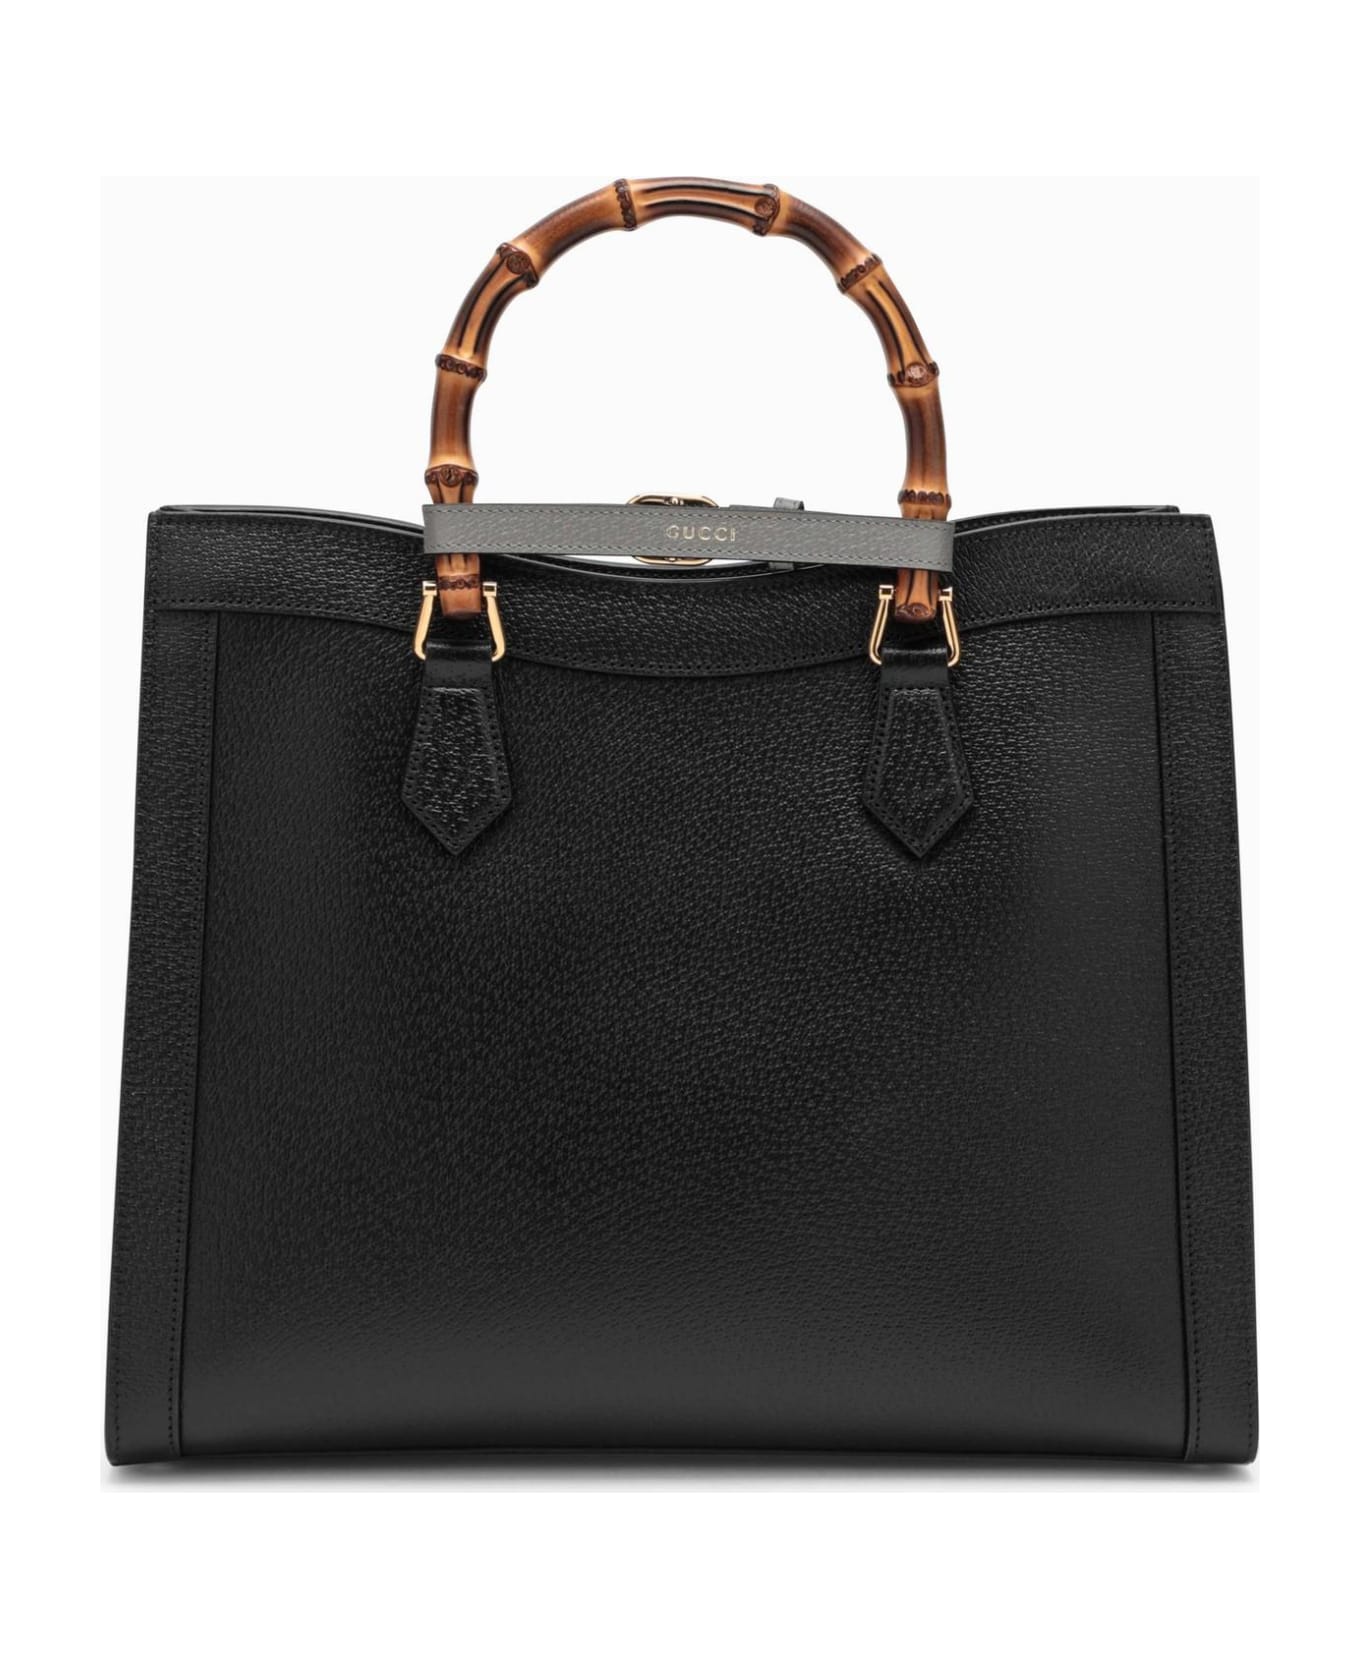 Gucci Diana Black Medium Tote Bag